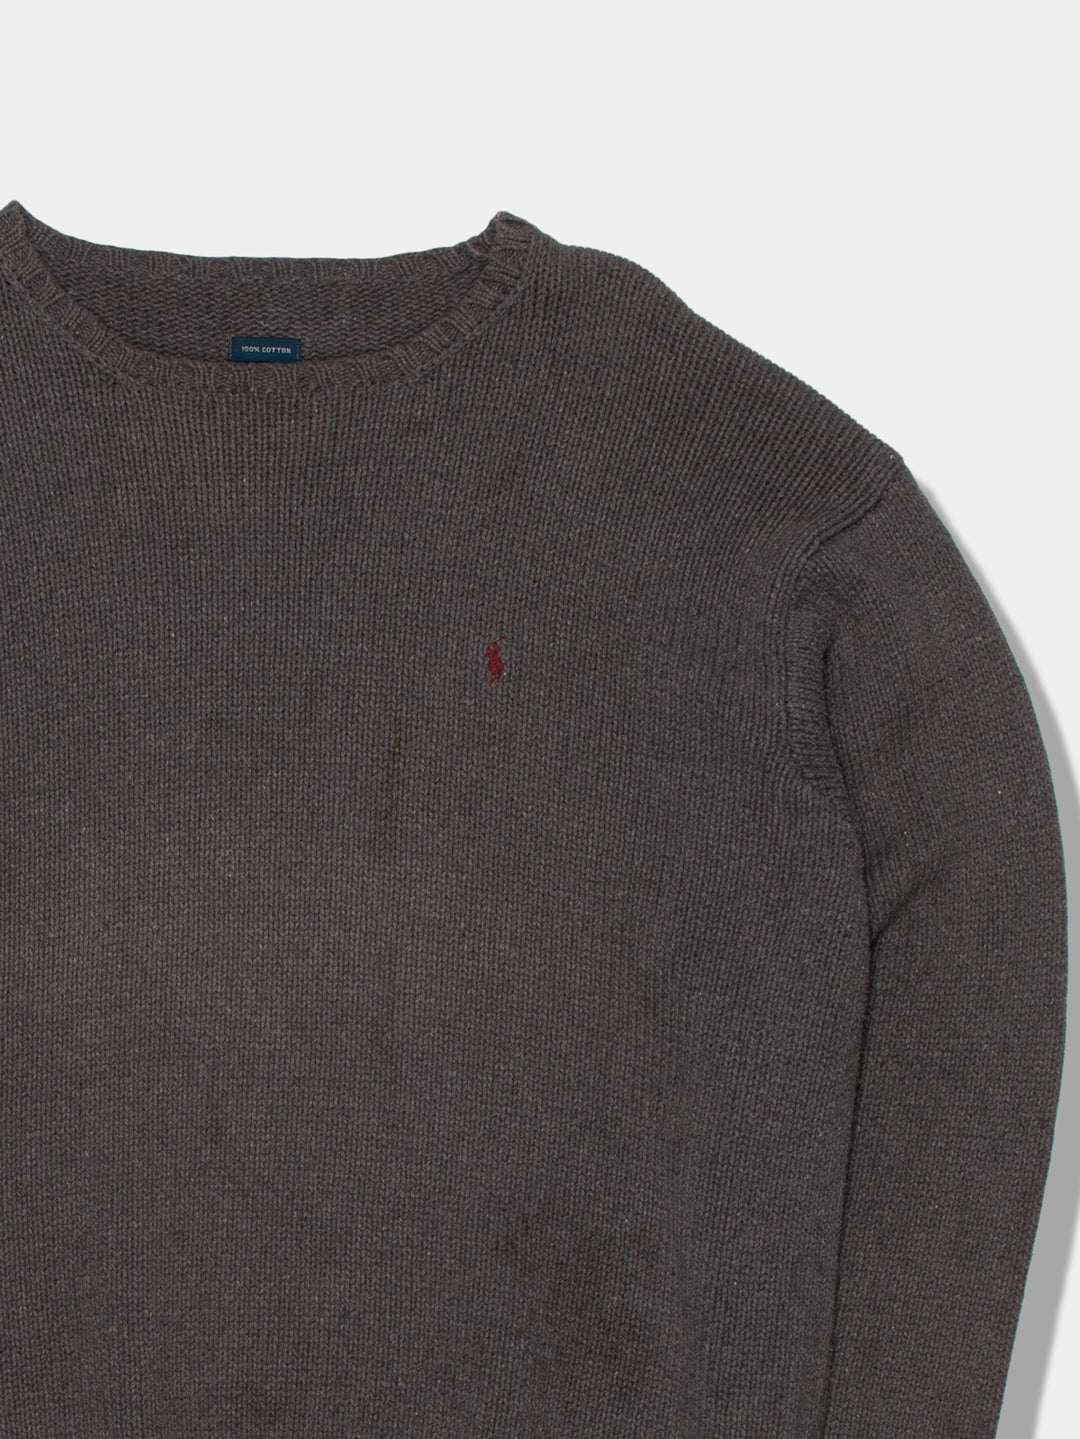 90s Ralph Lauren Sweater (XXL)